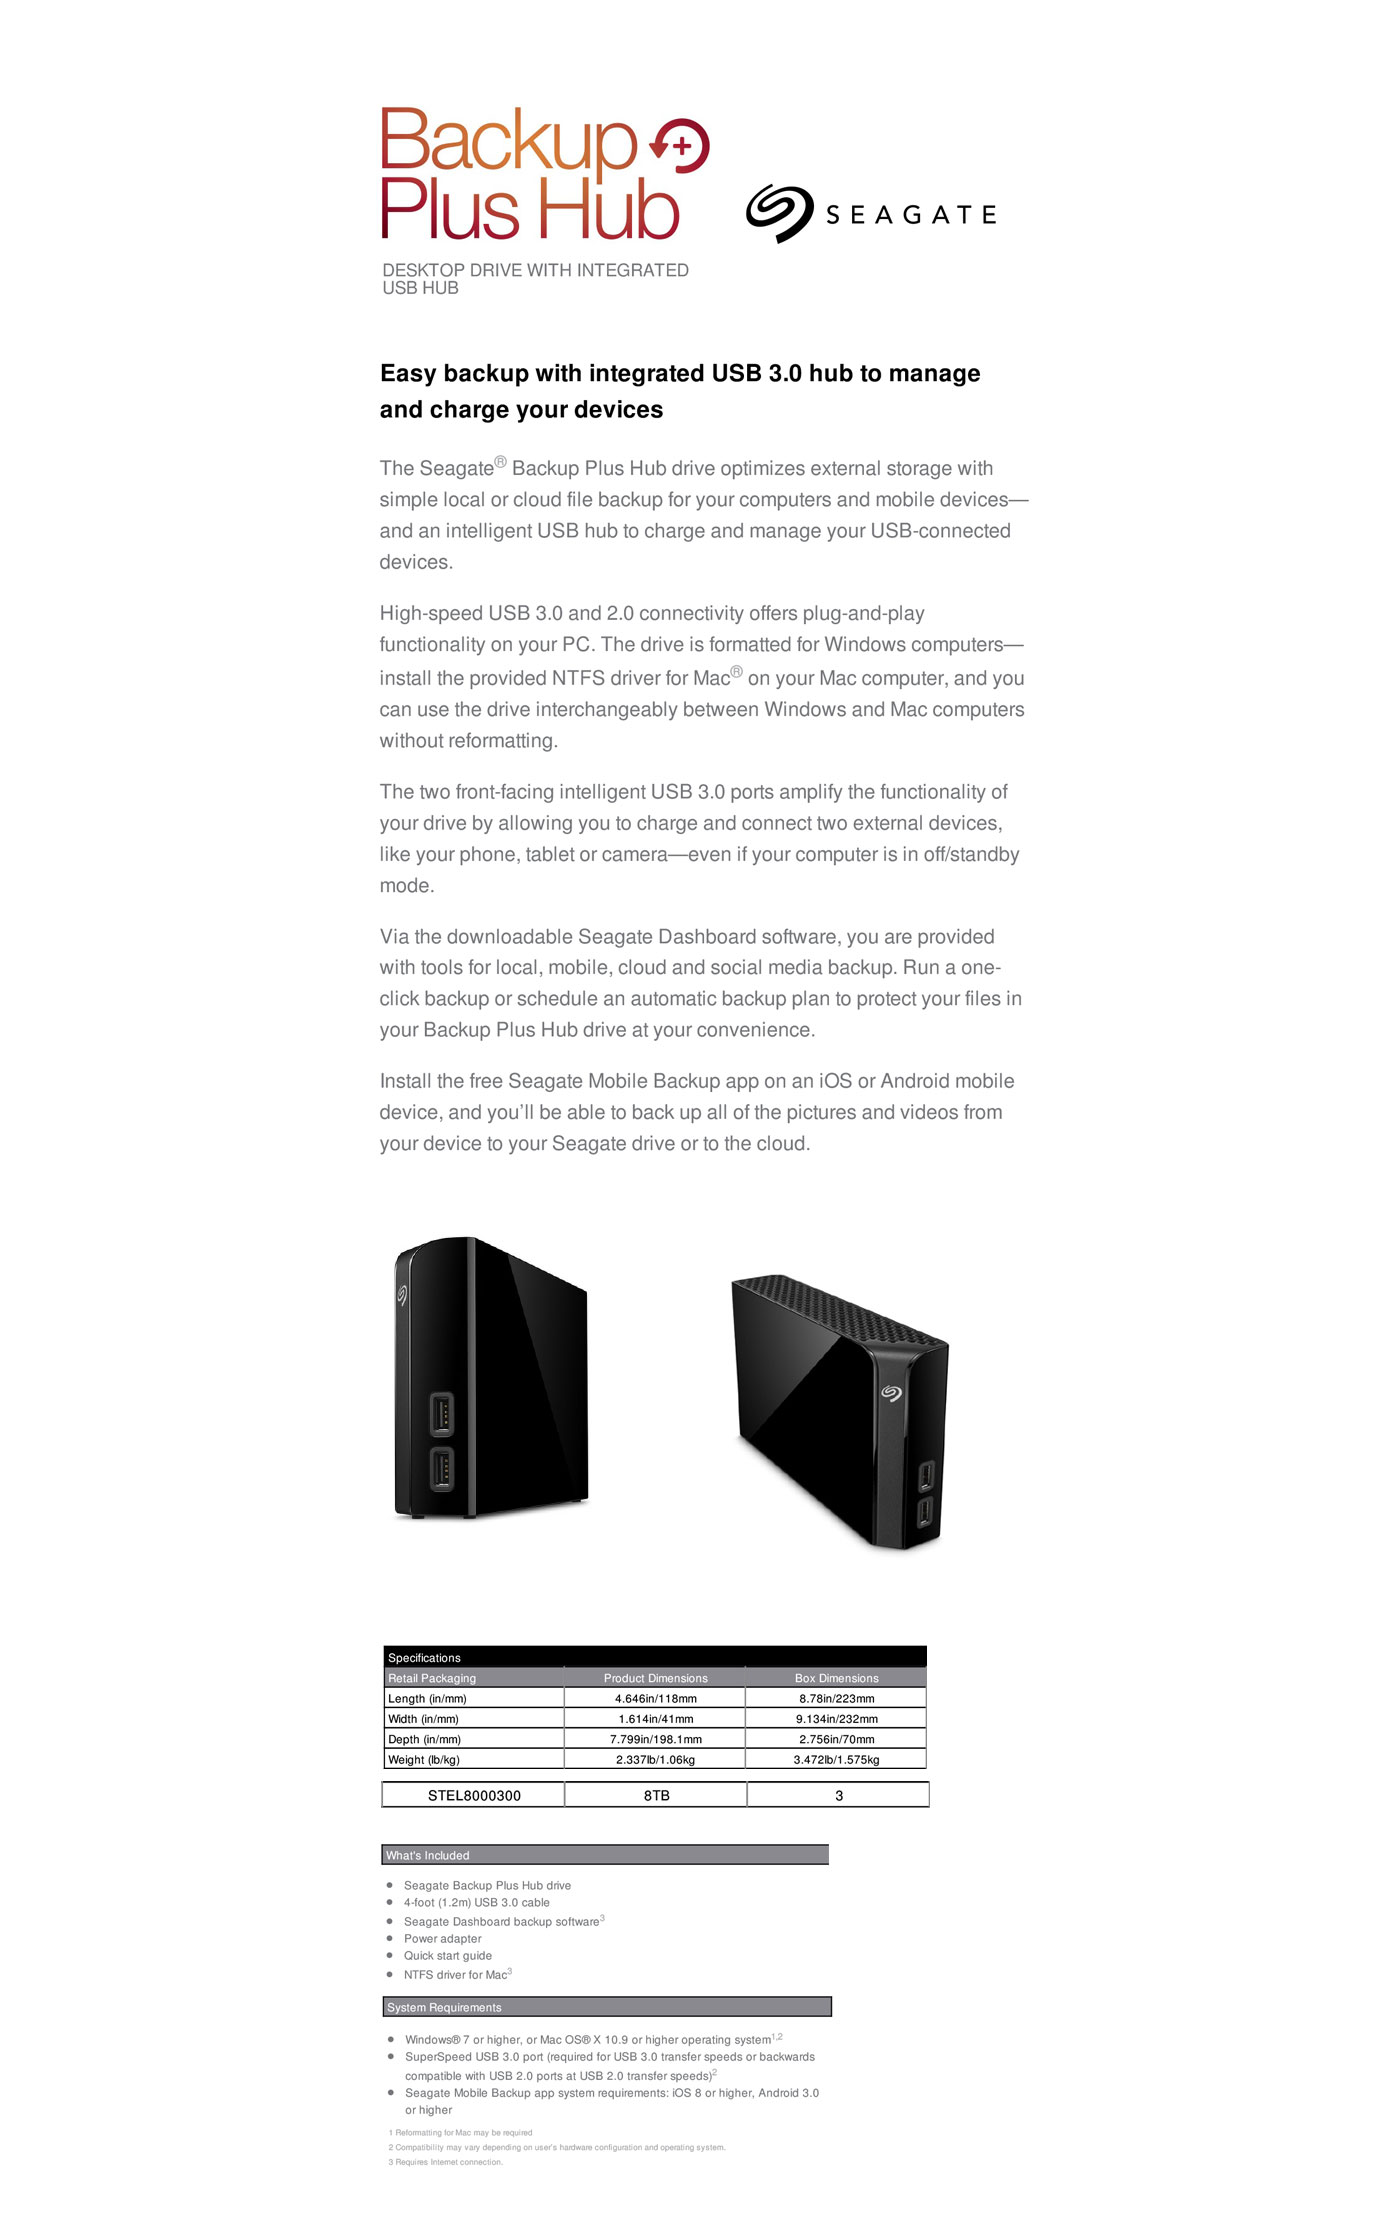 Seagate 8TB Backup Plus Hub Desktop Drive features